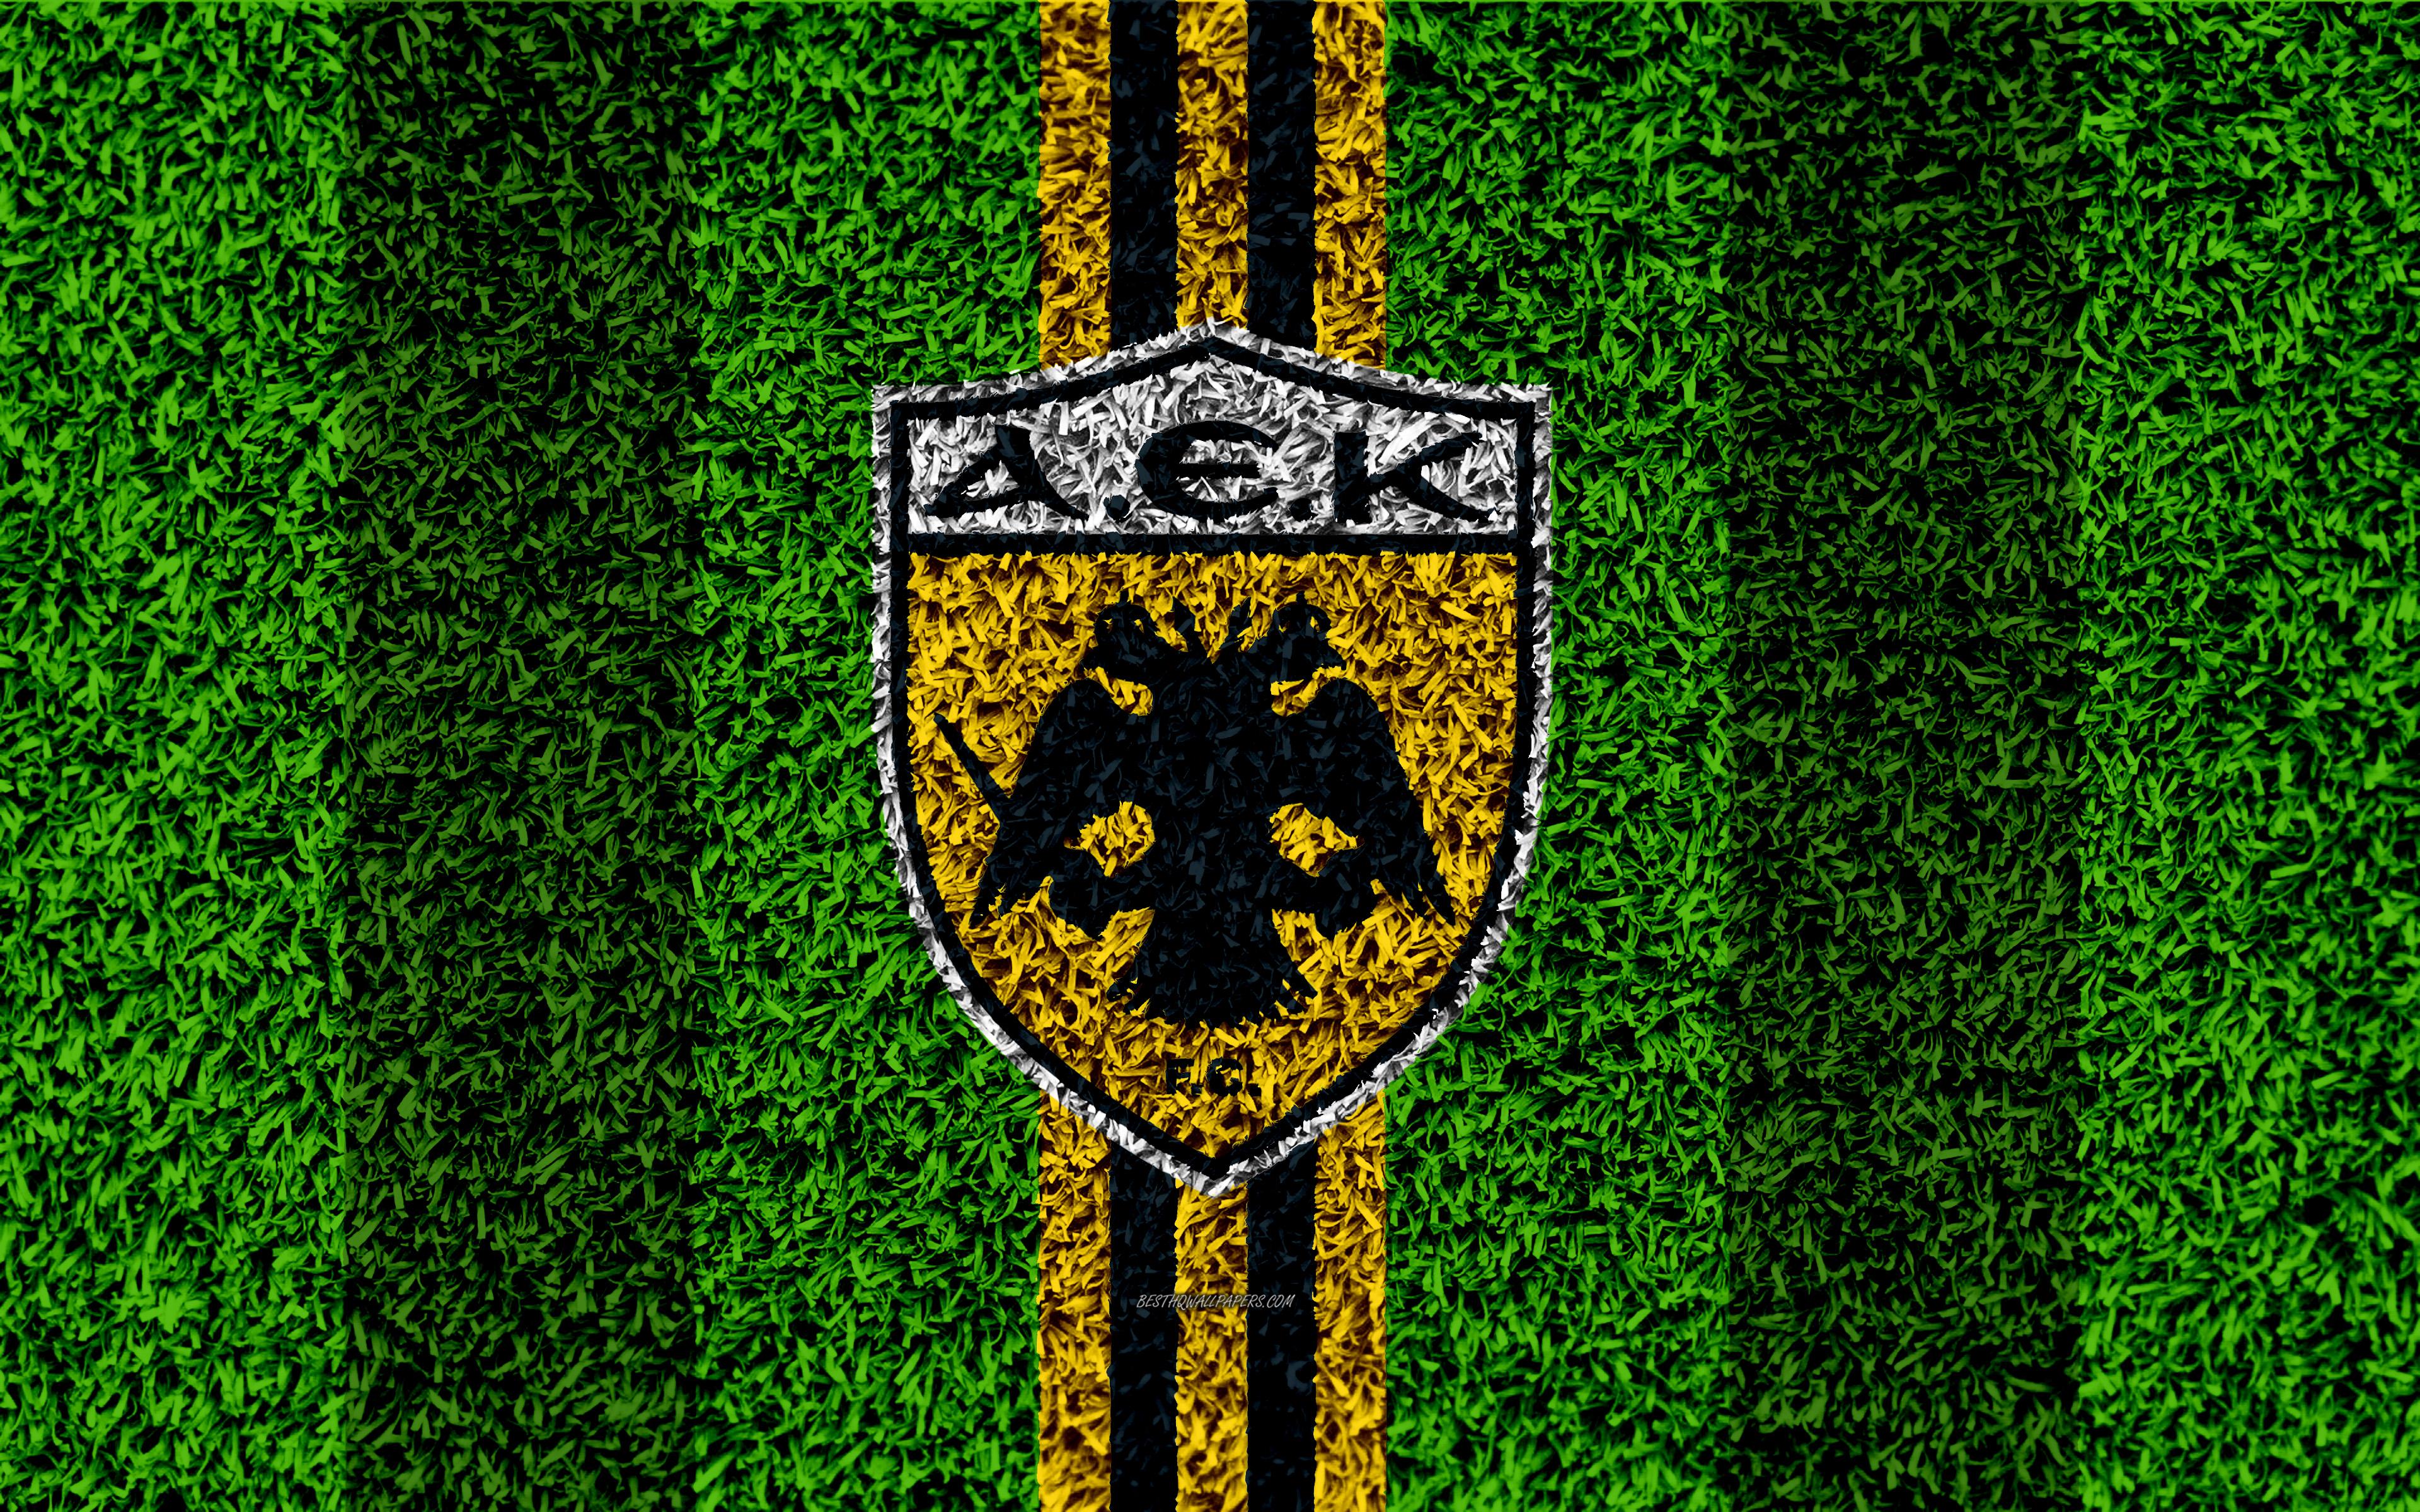 AEK Athens F.C. 4k Ultra HD Wallpaper. Background Imagex2400